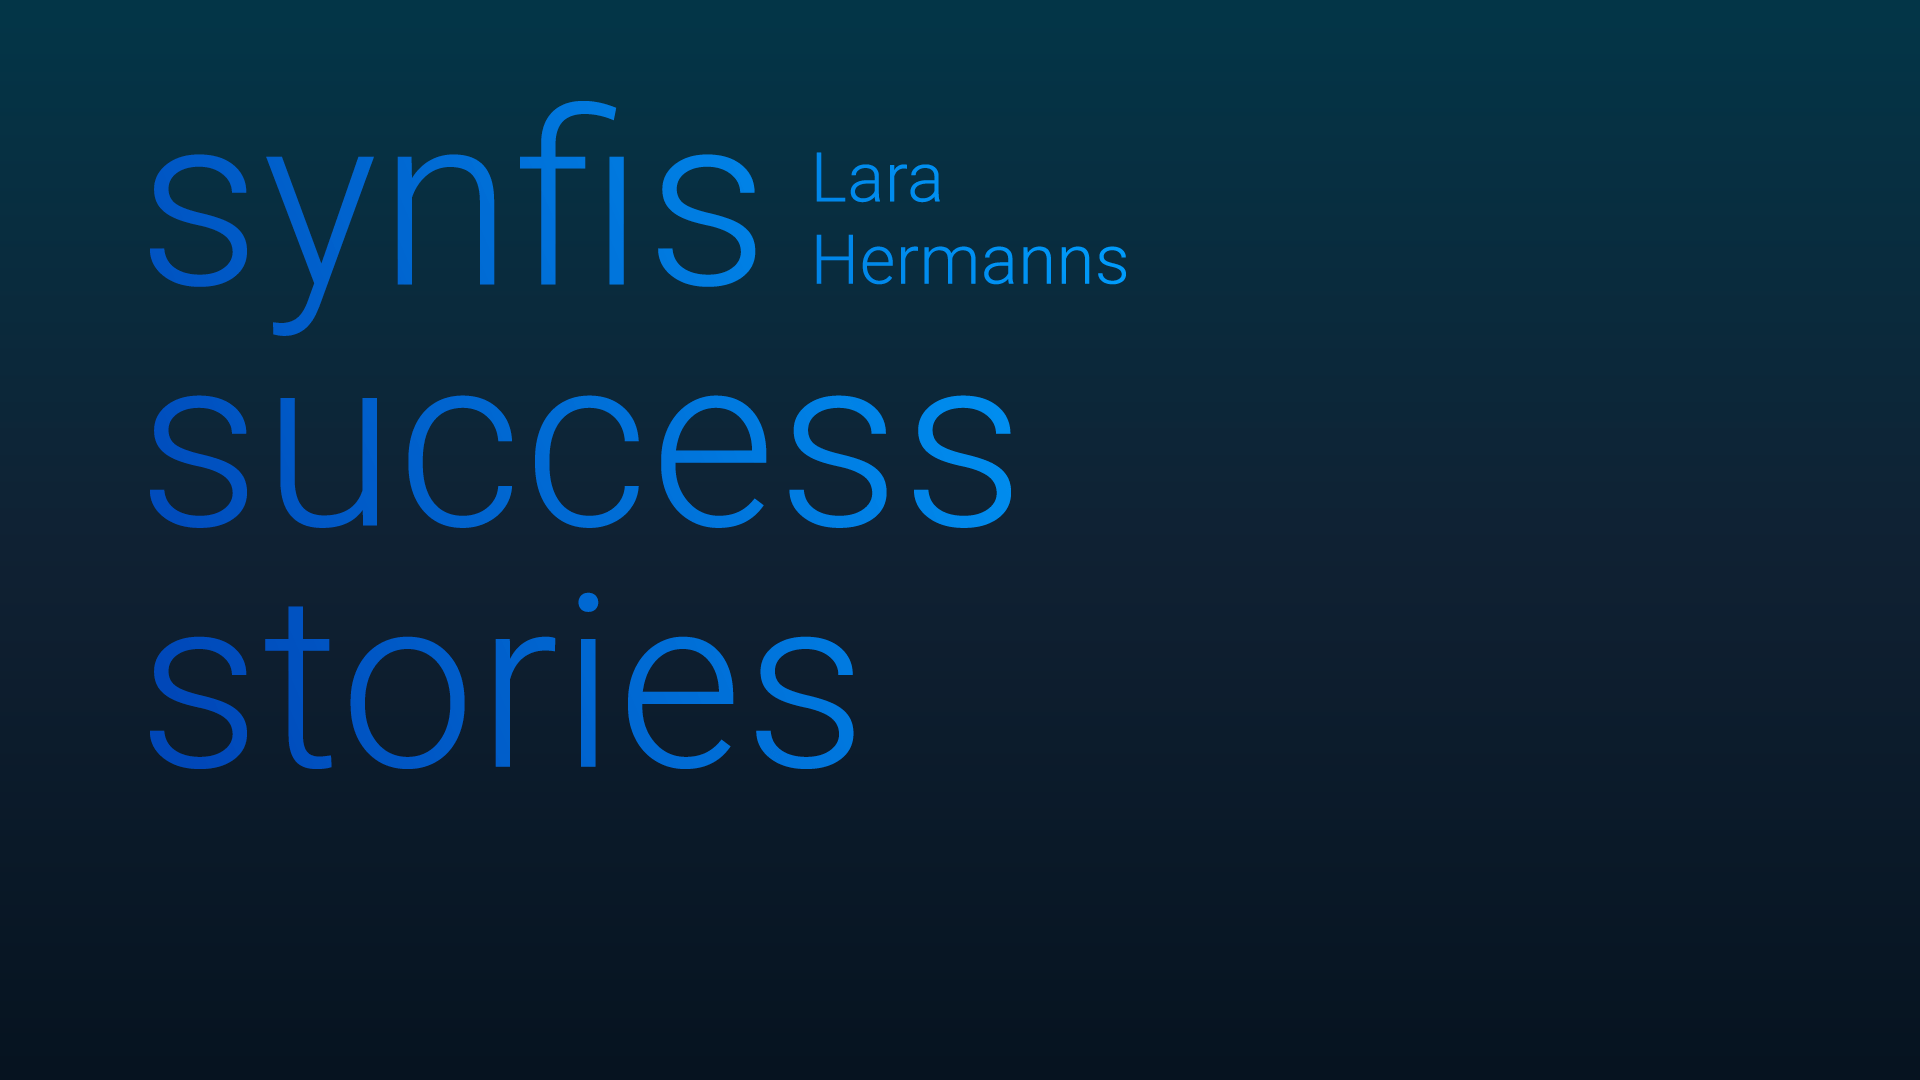 synfis_cuccess-stories_Lara-Hermann_1920x1080